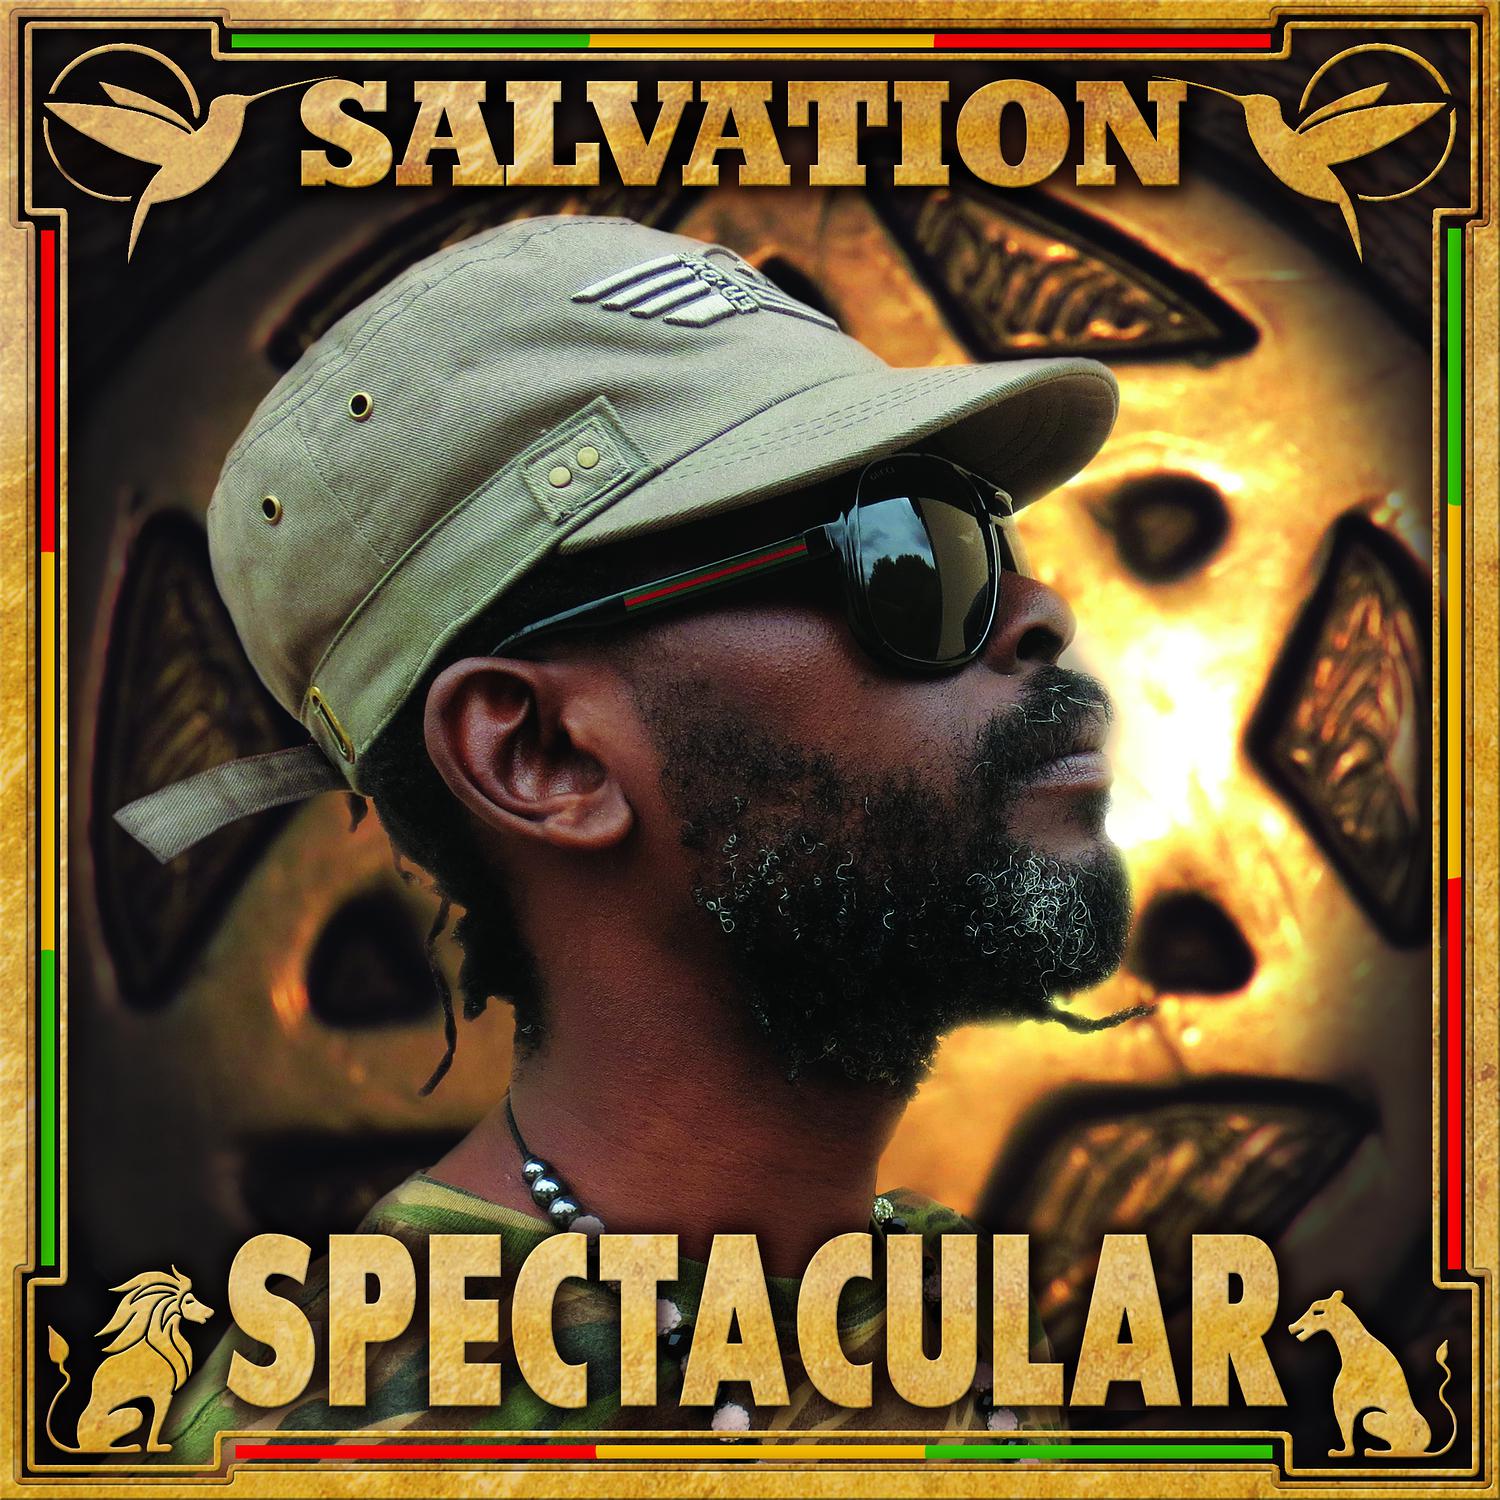 Spectacular - Salvation